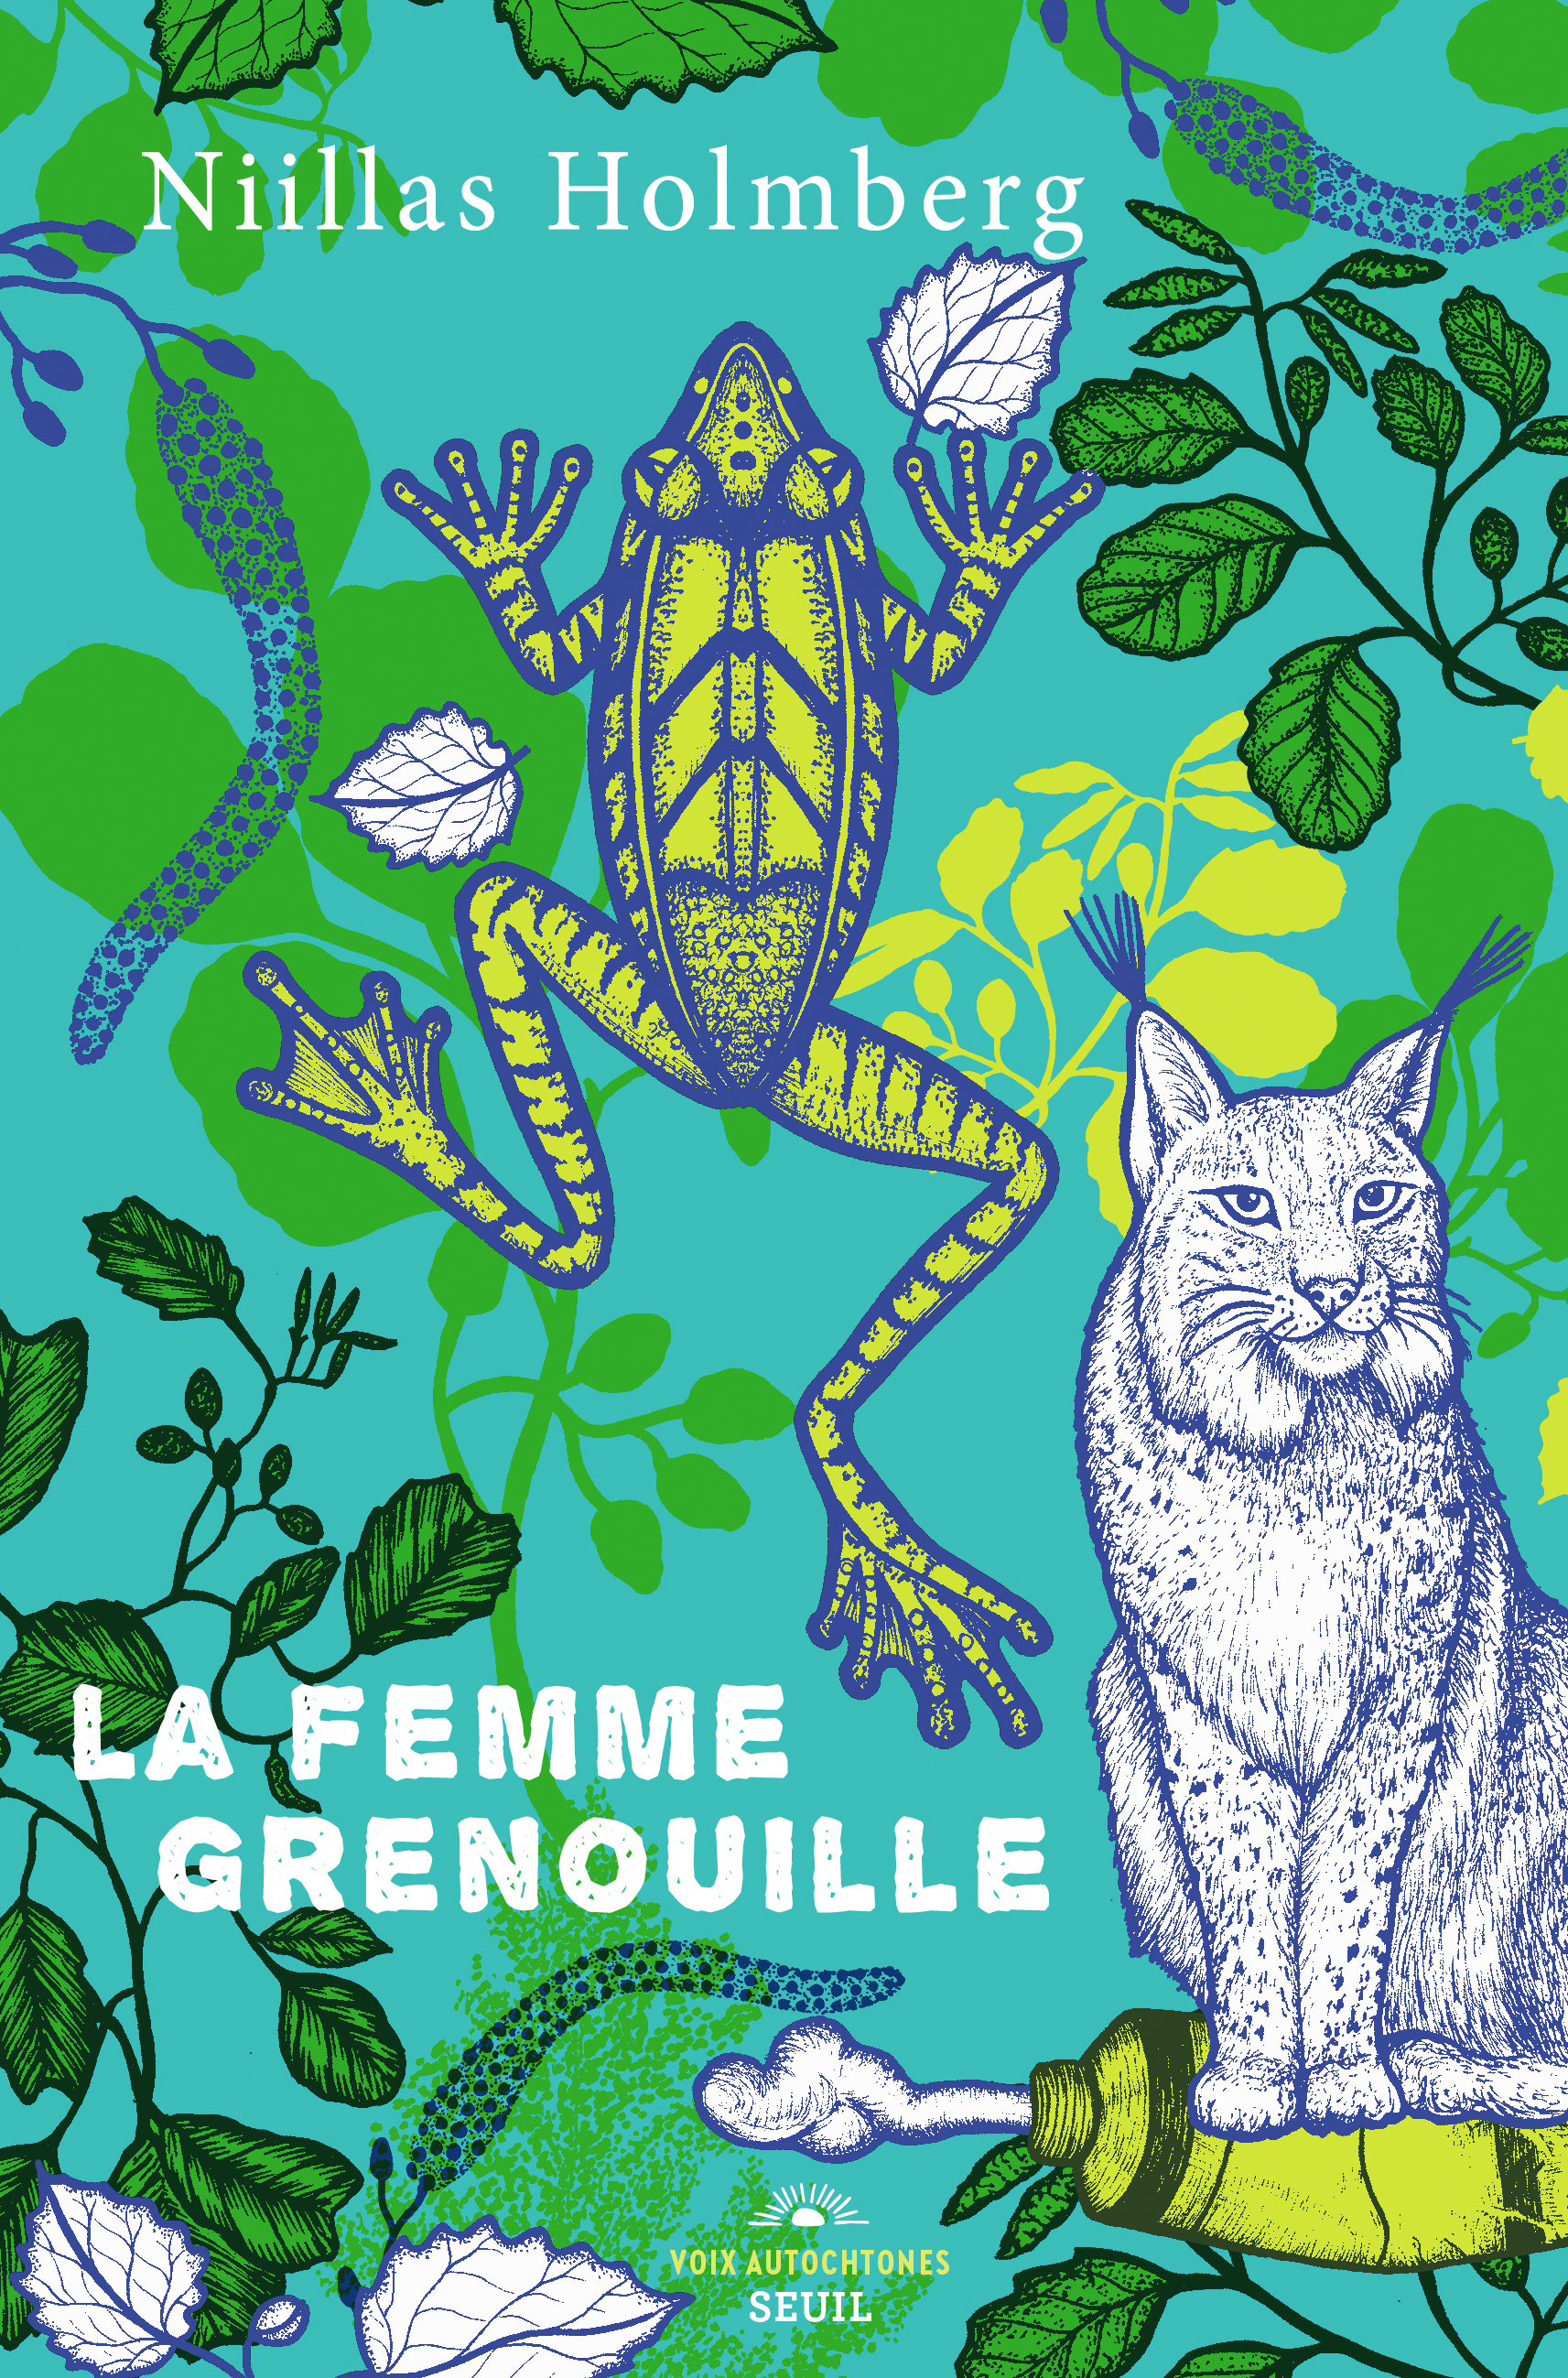 Afficher "La Femme grenouille"